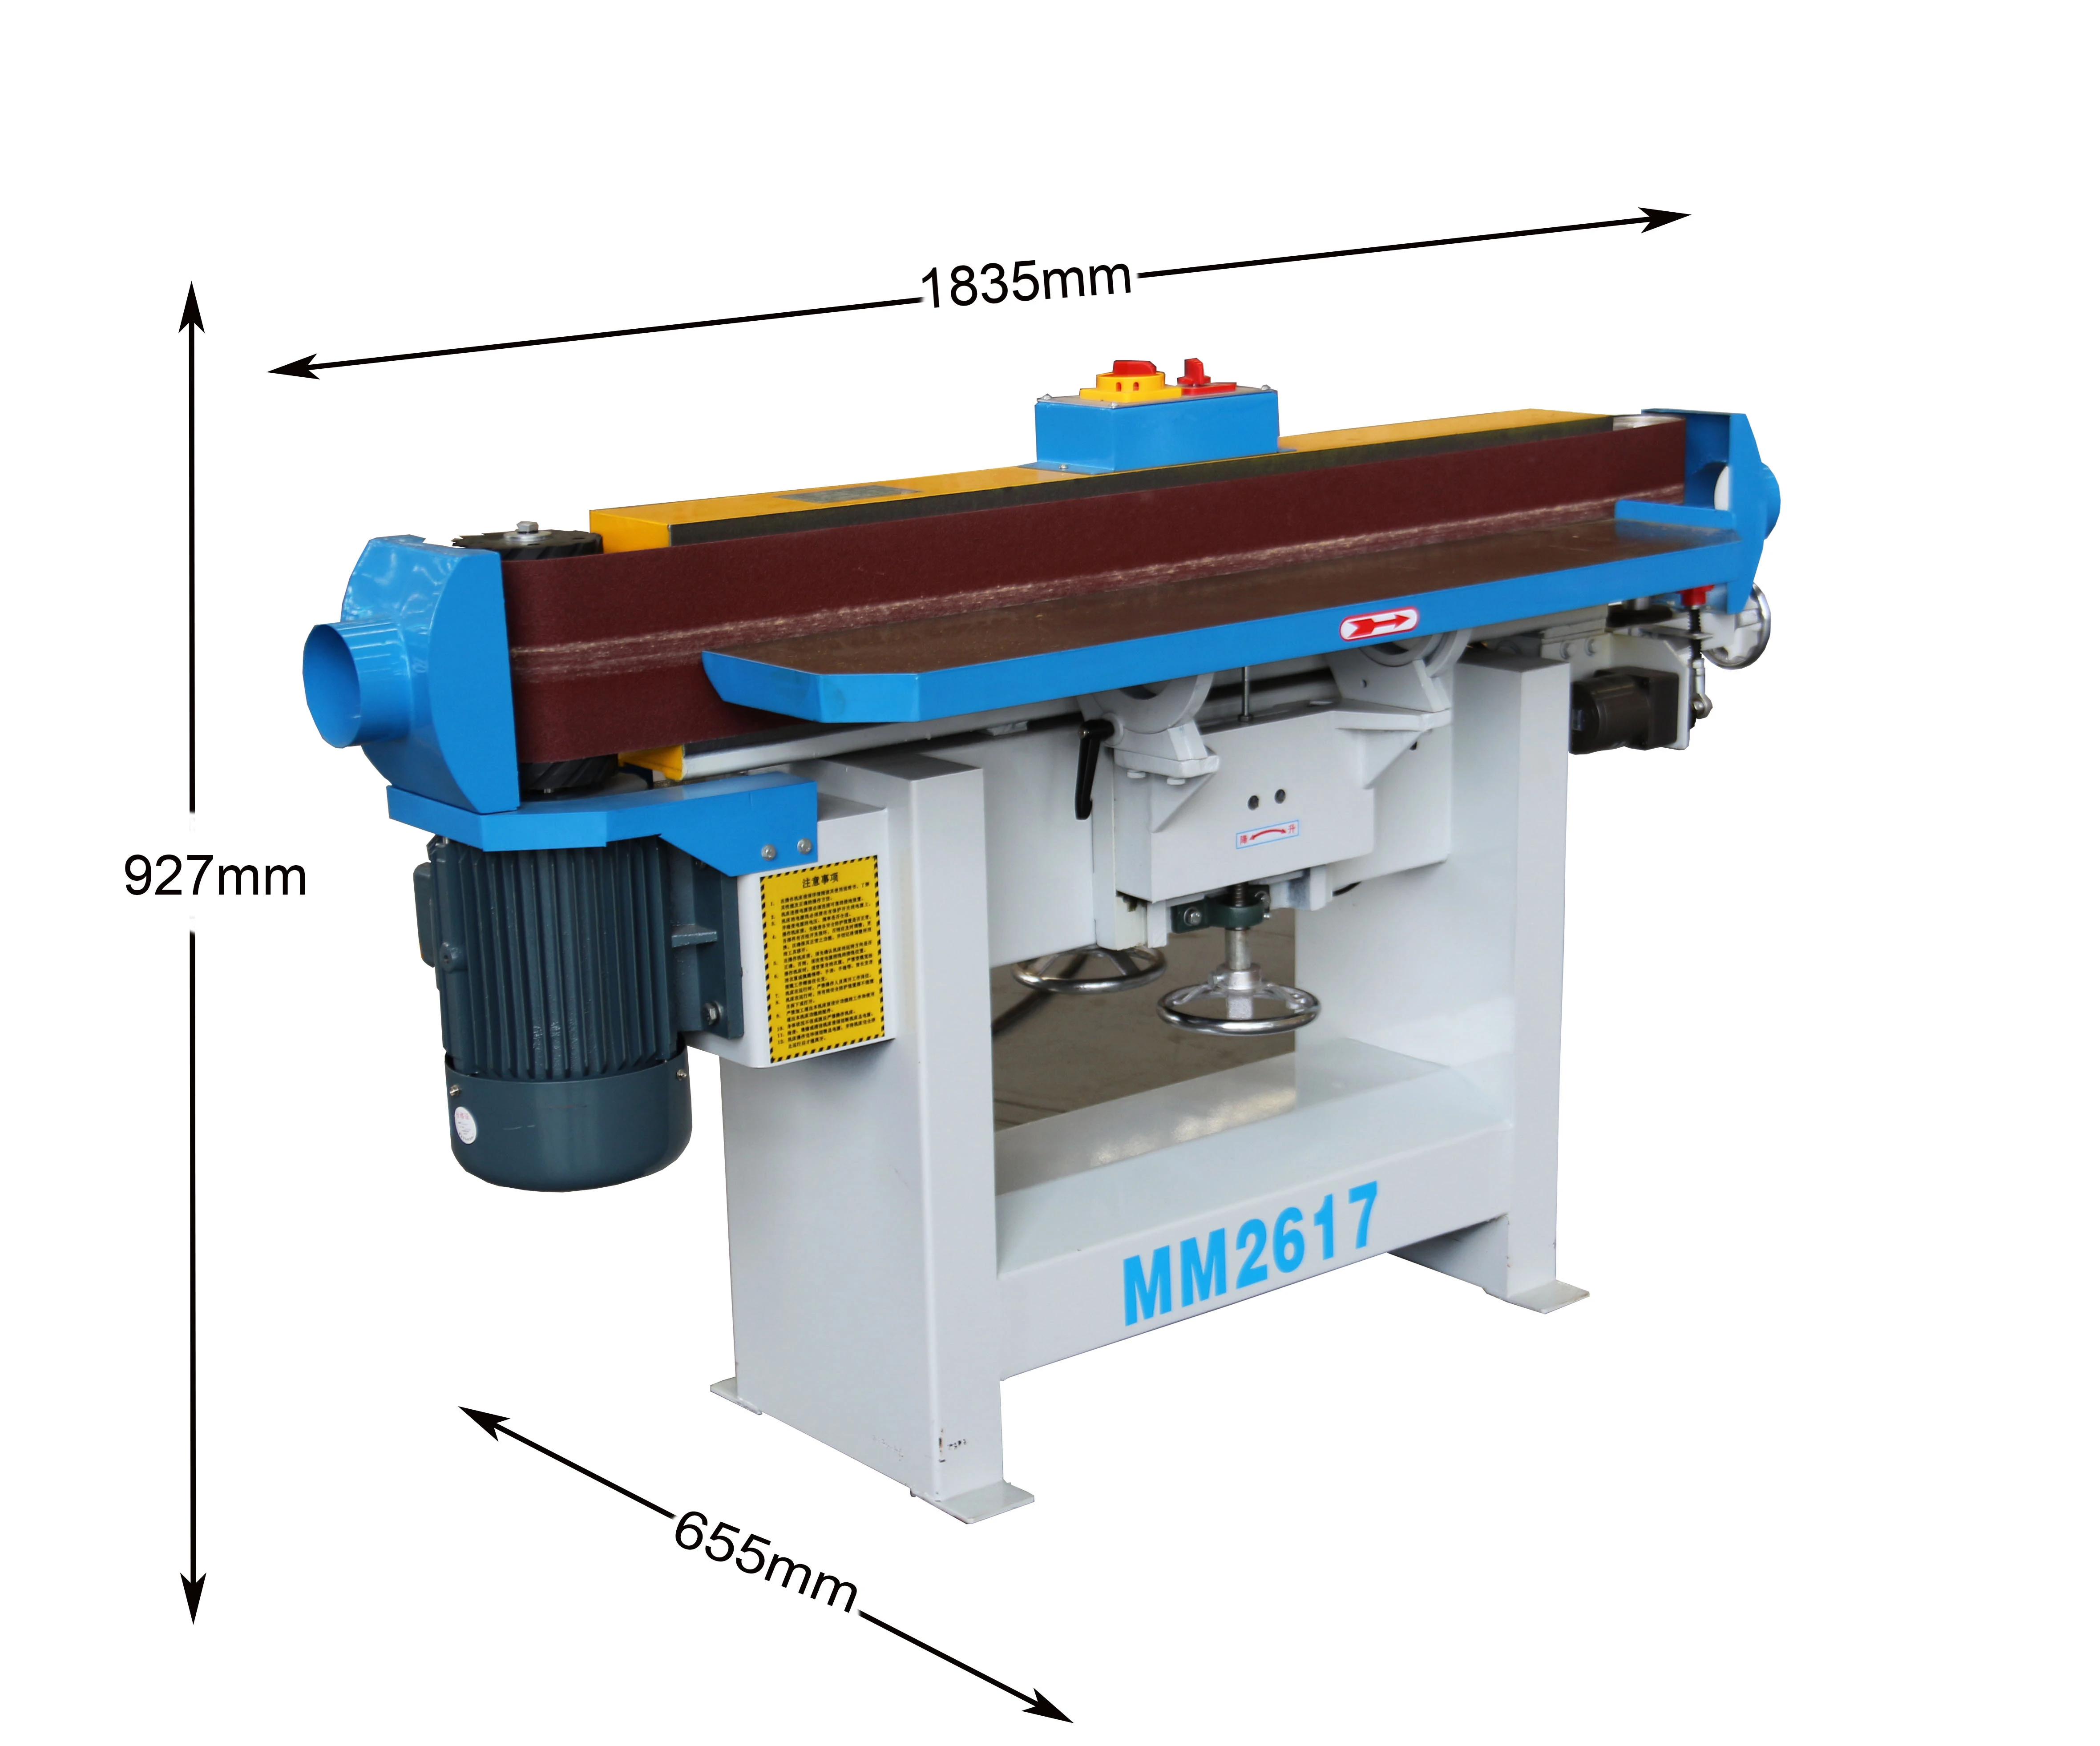 Manual vertical oscillating edge sanding machine, or belt sanding machine, modle NO. MM2617 from SAGA